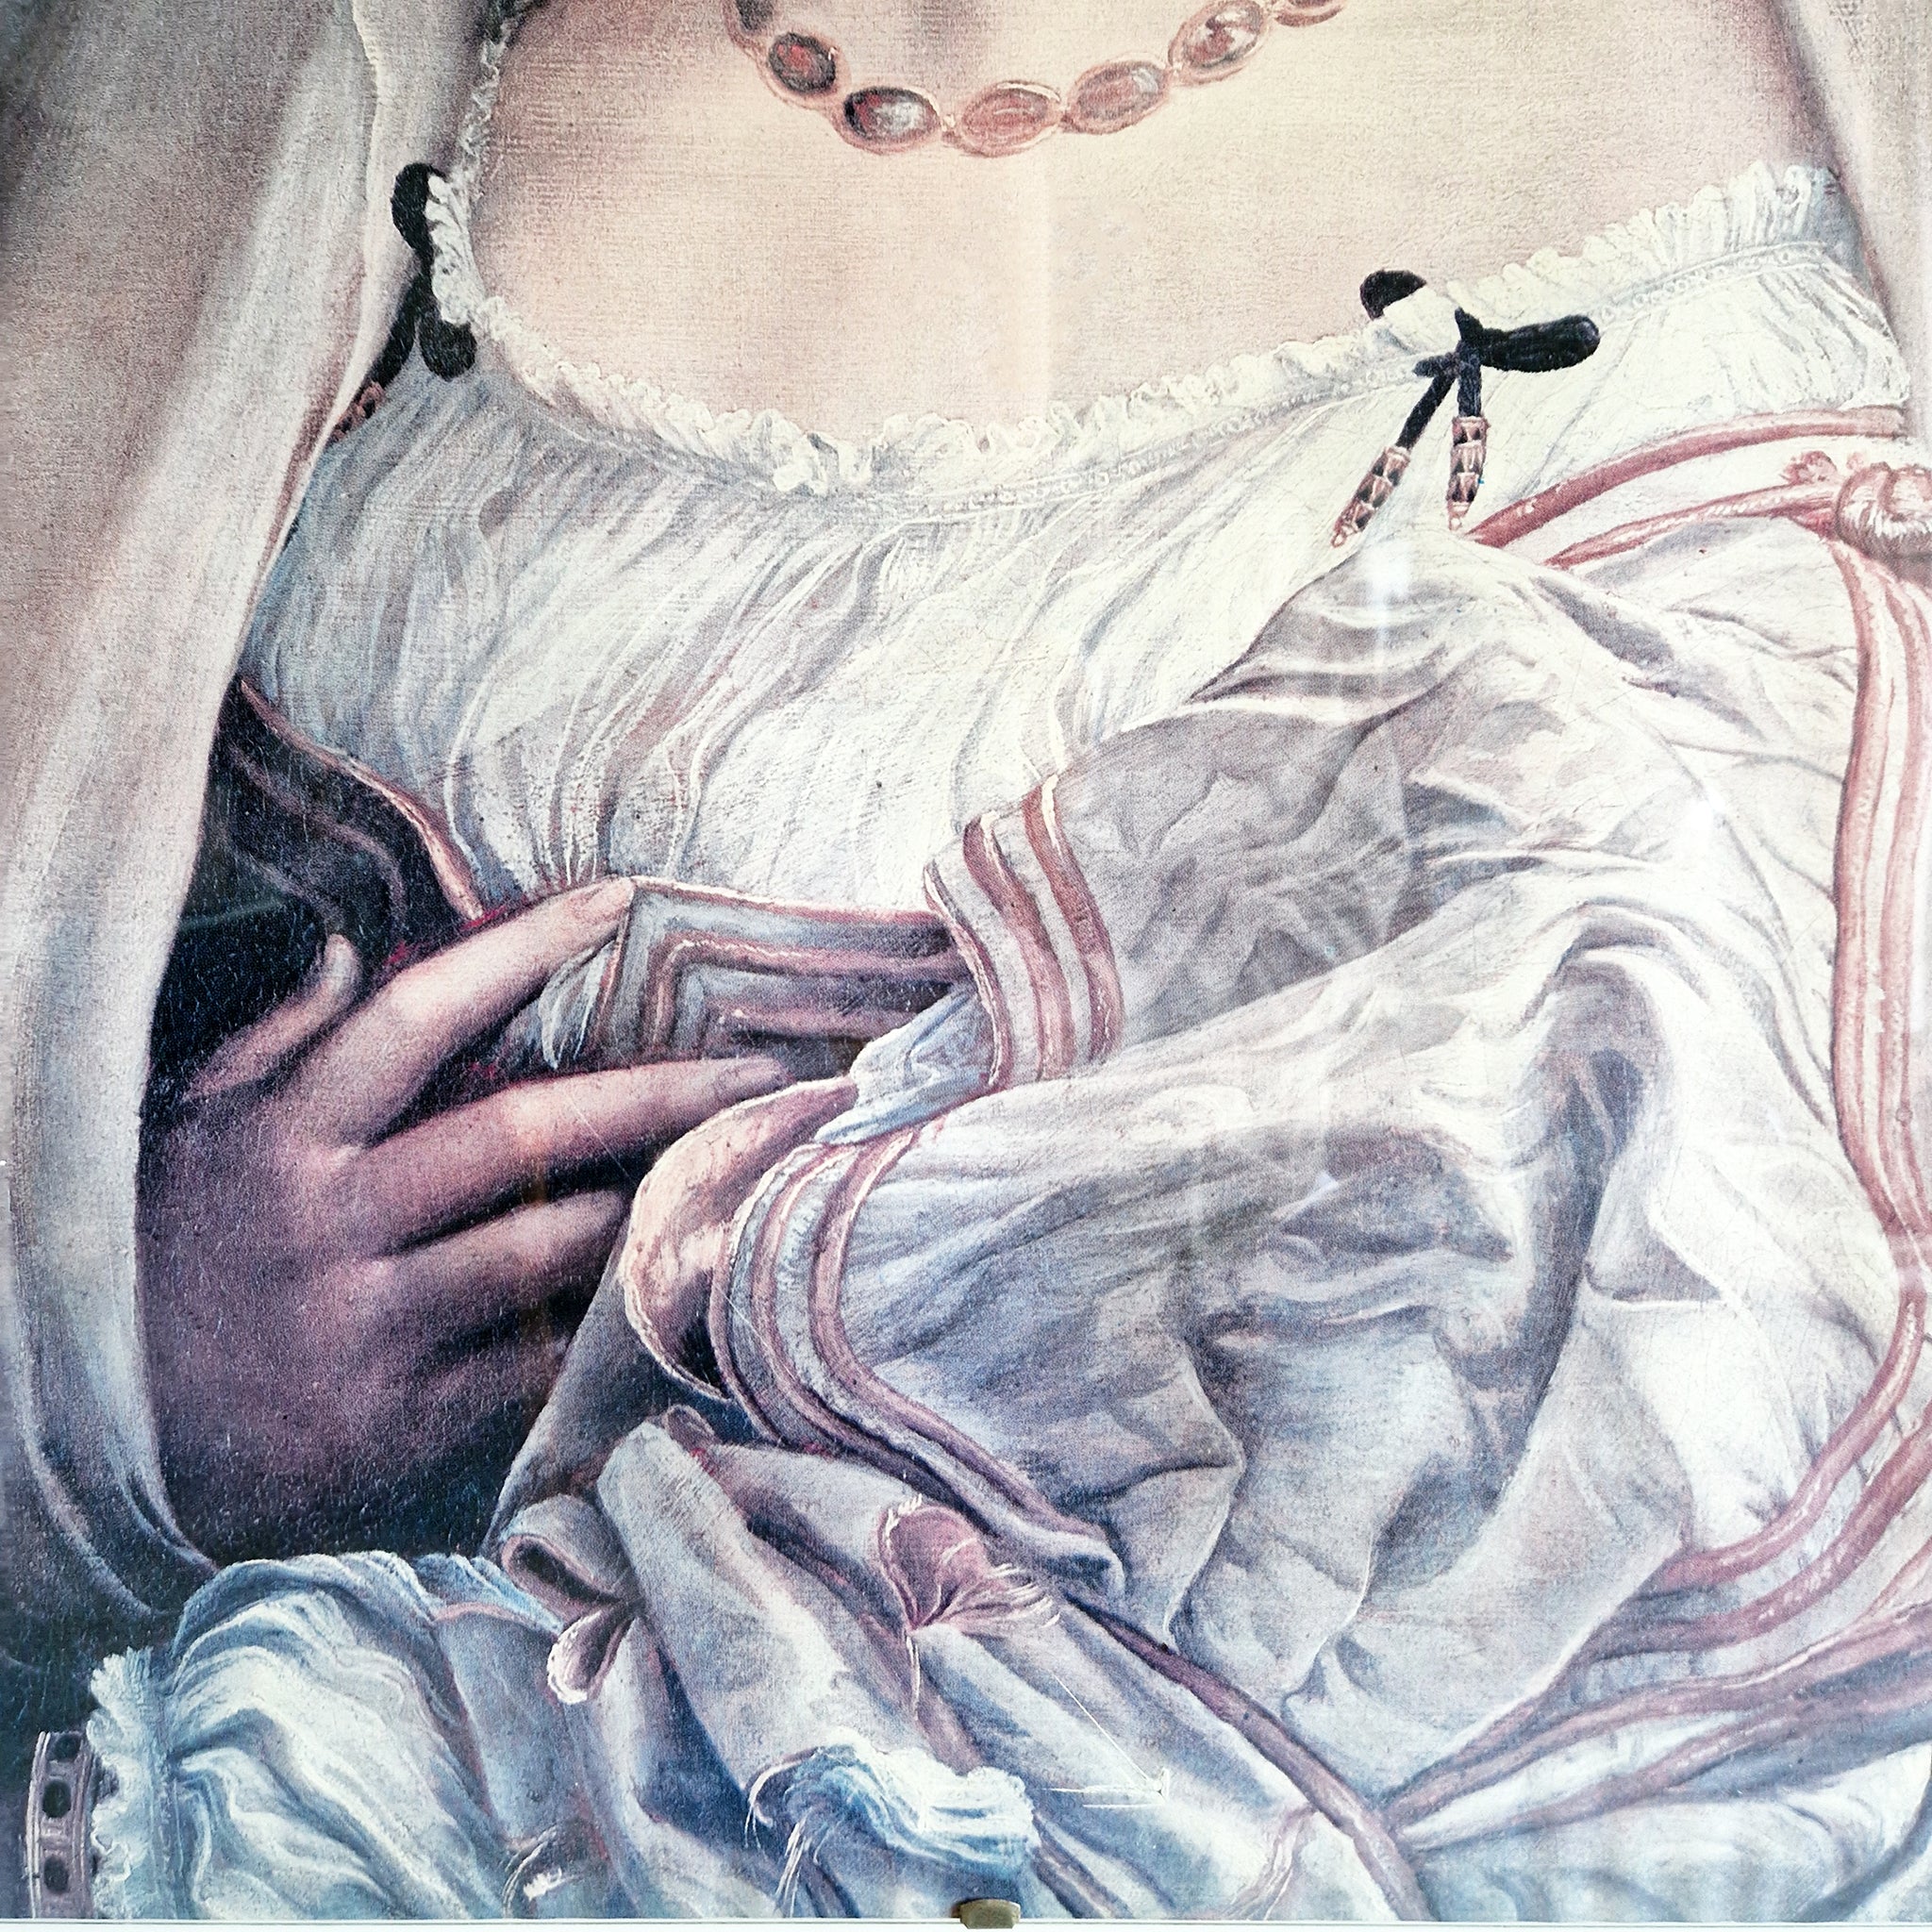 1984 museum poster of Raffaello painting